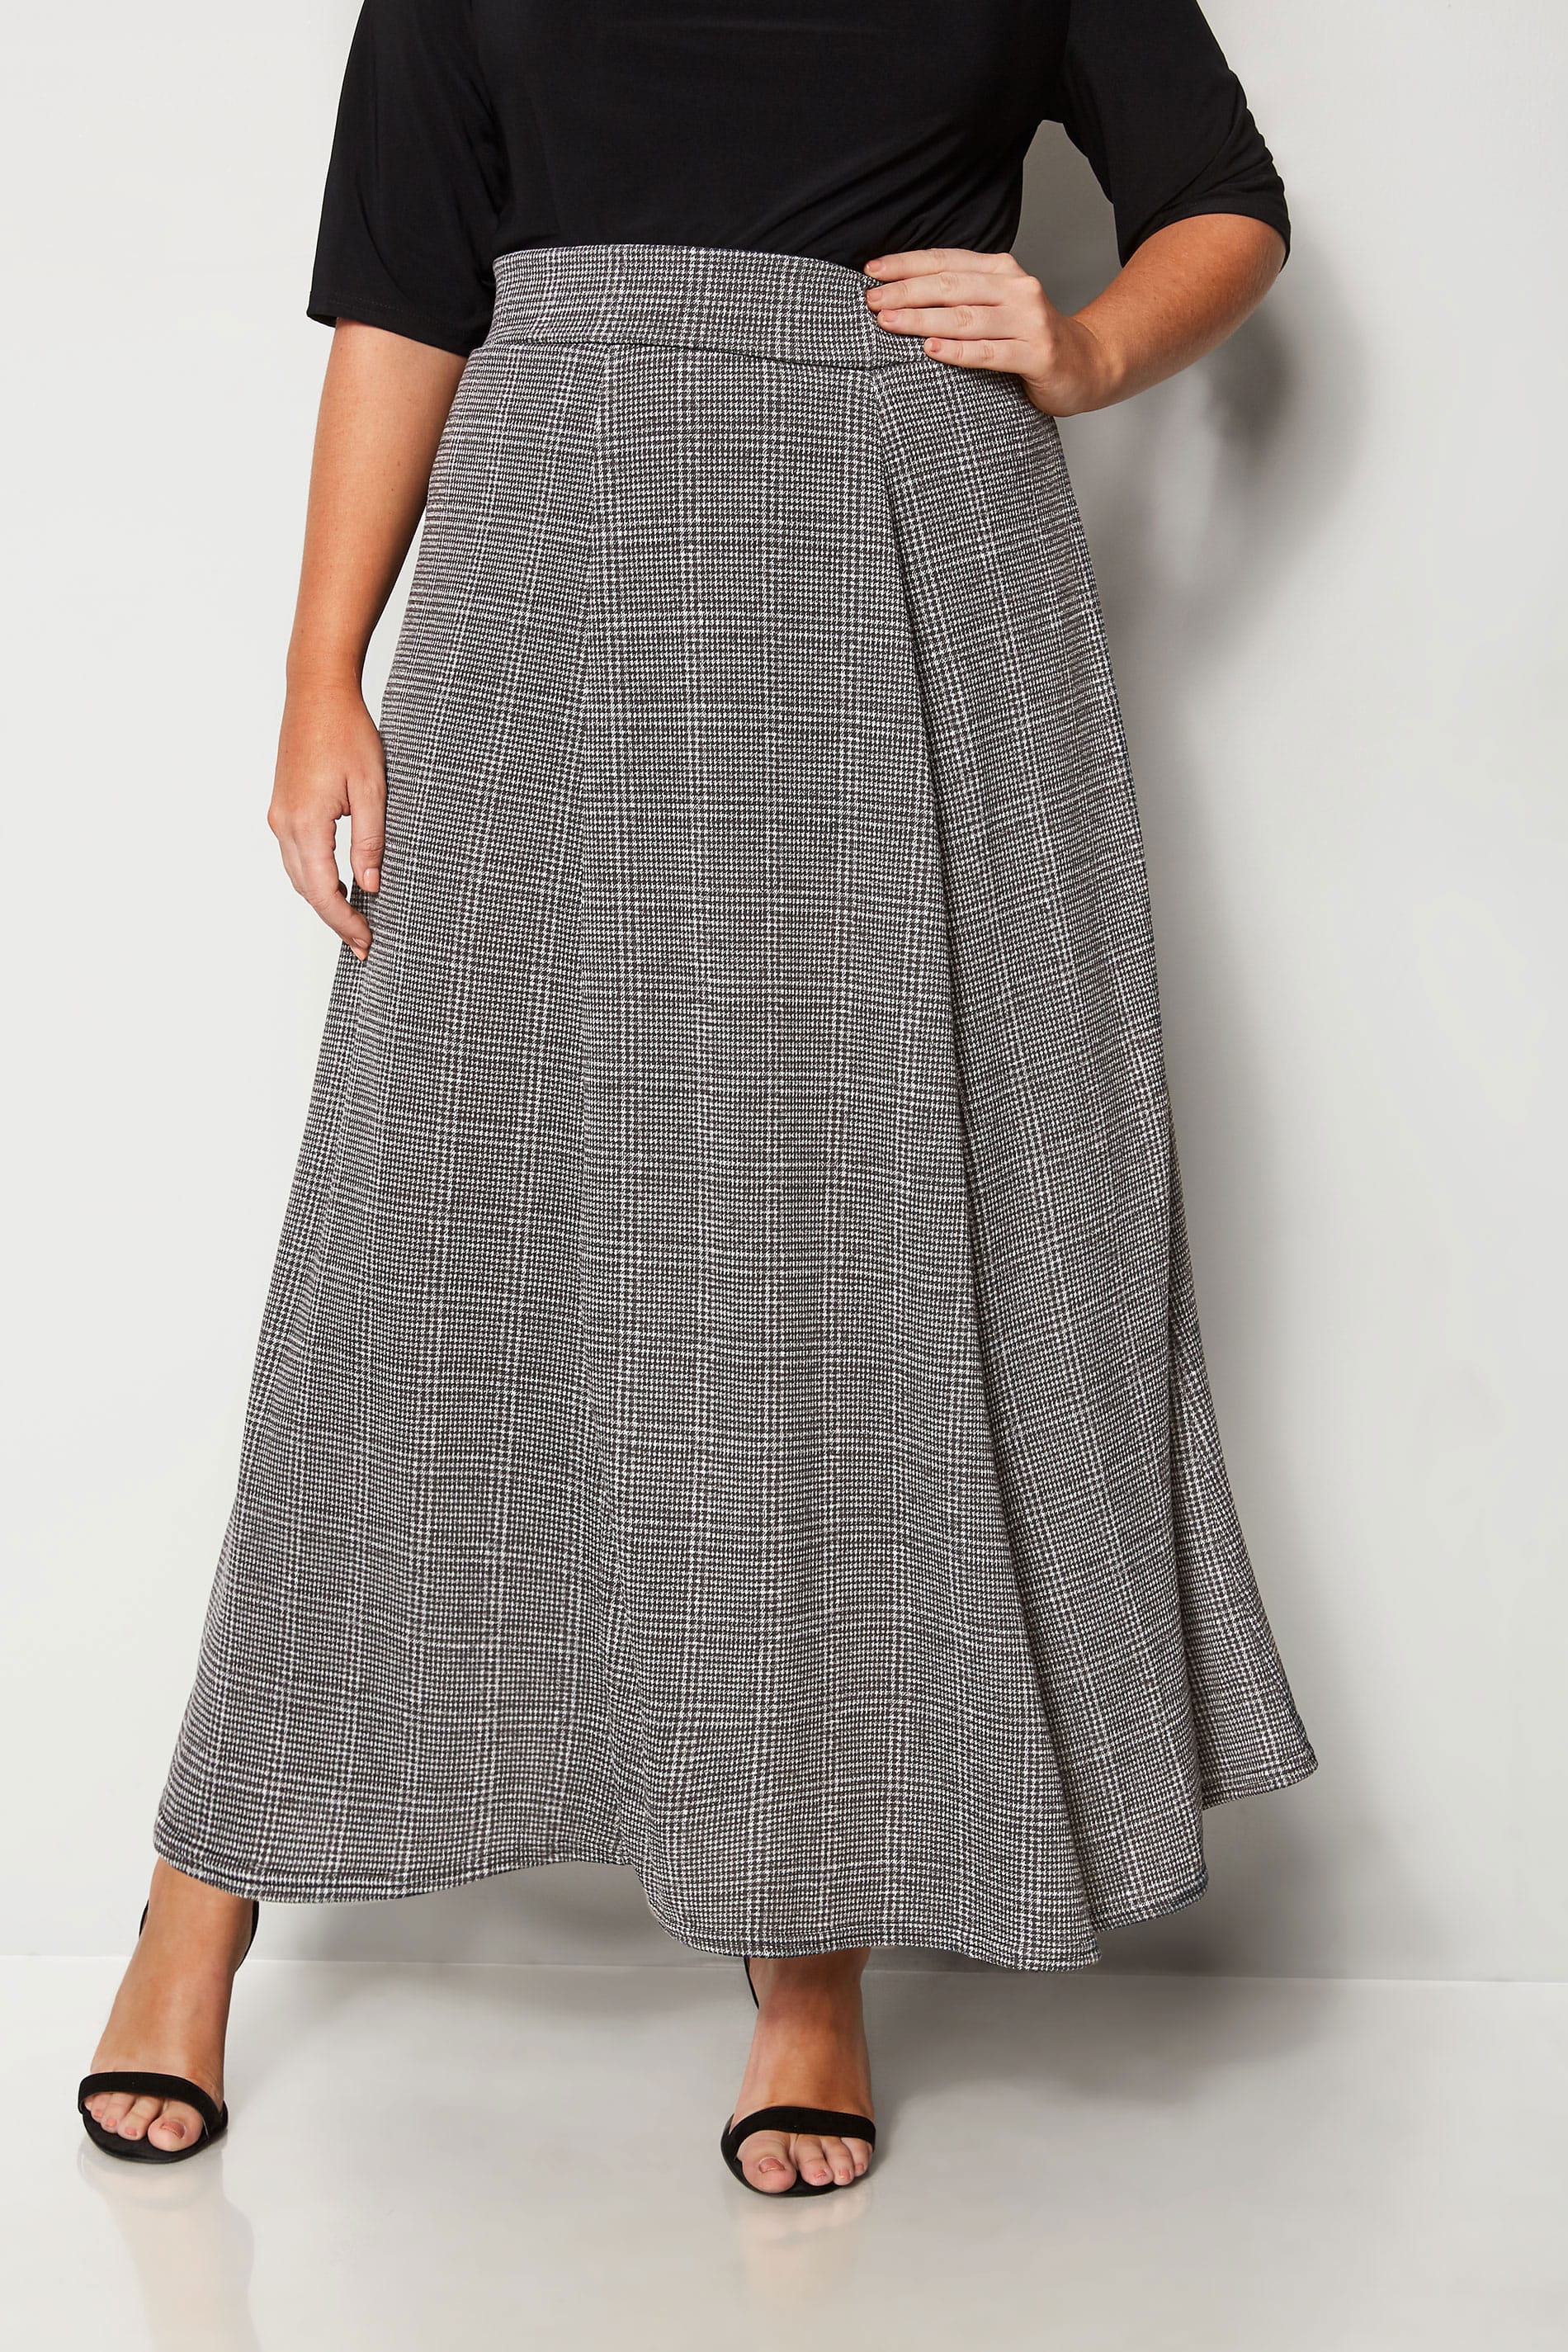 Grey Checked Maxi Skirt, plus size 16 to 36